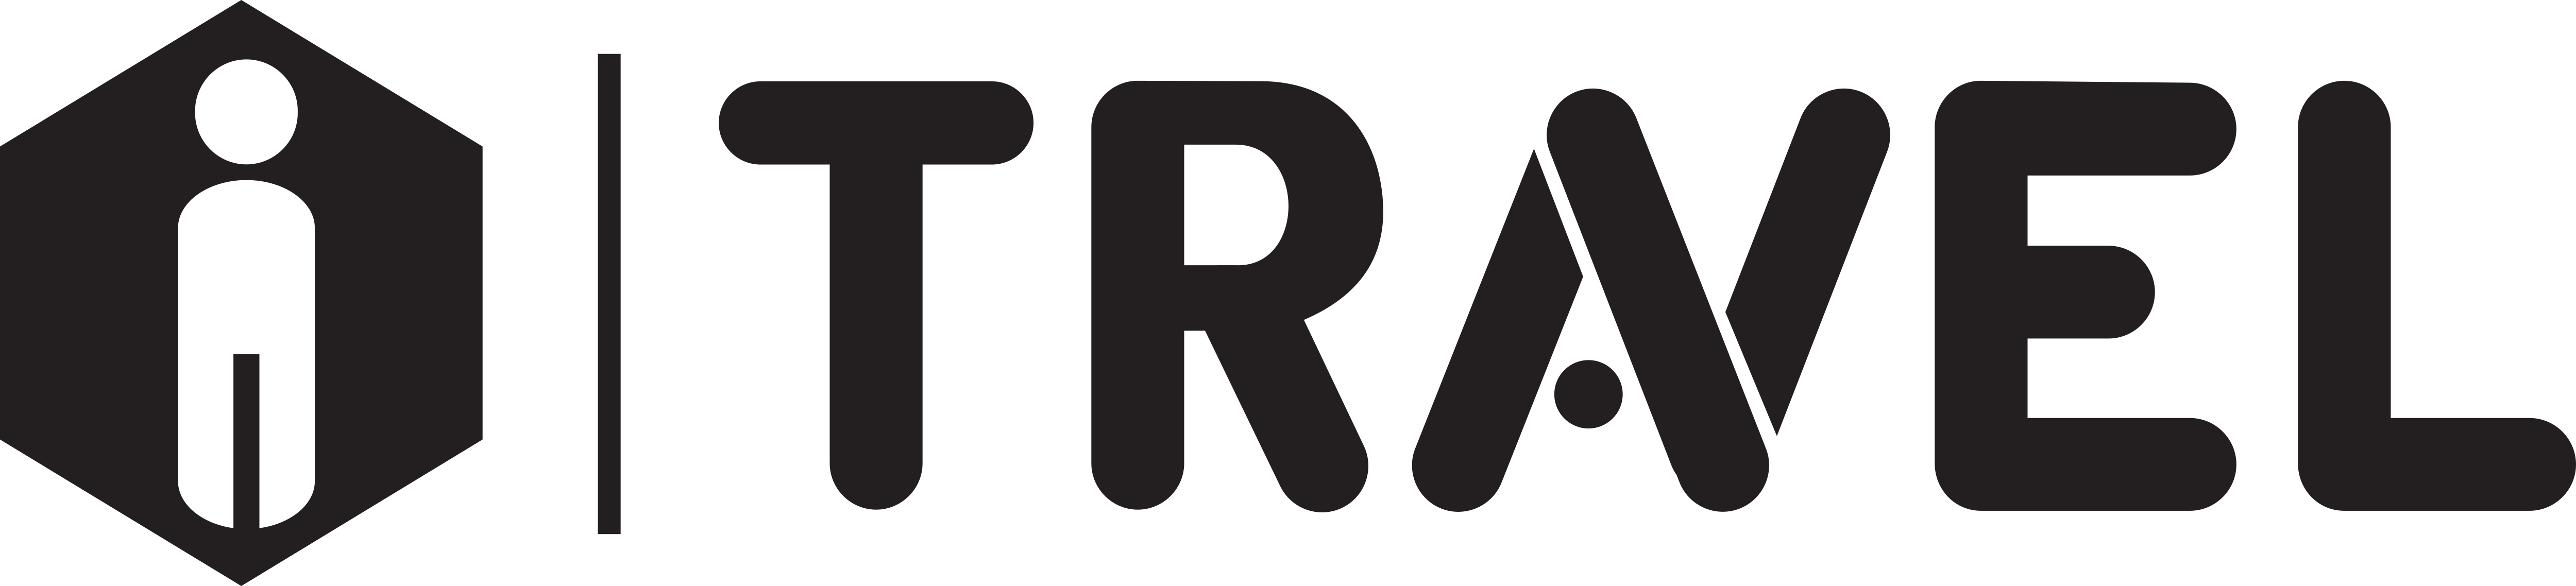 i-Trave – Logos Download